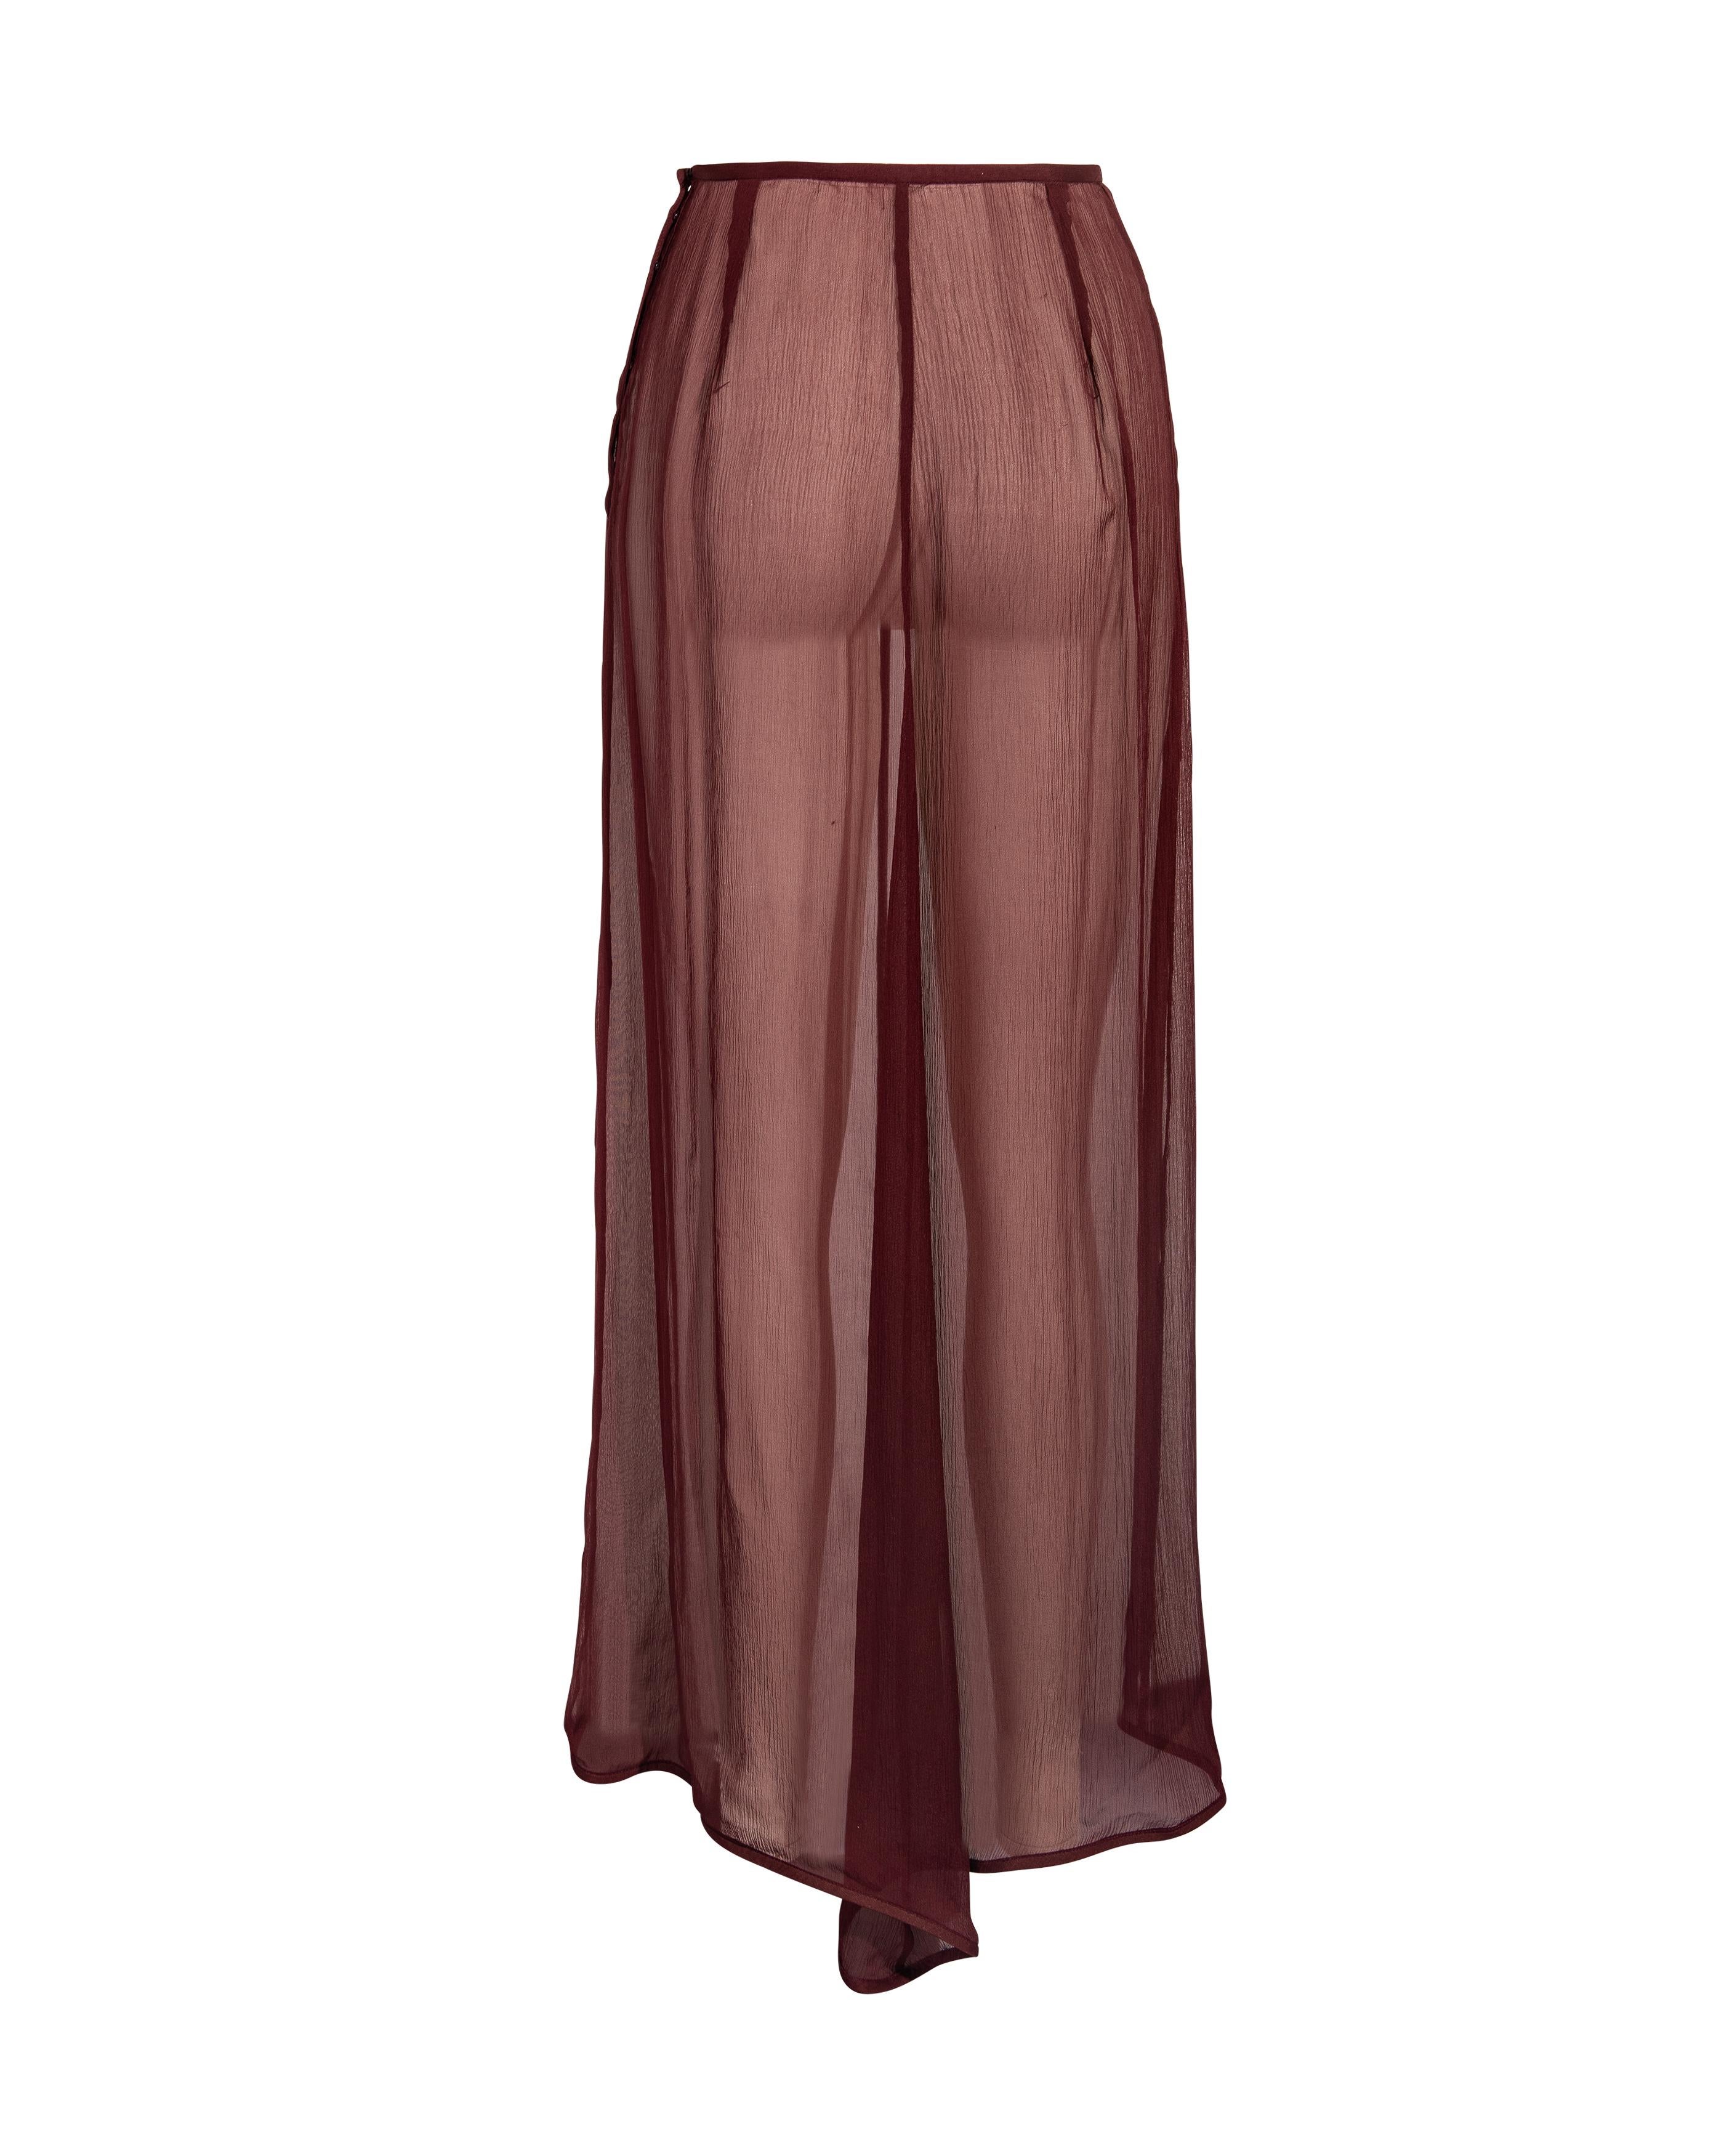 S/S 1997 Prada by Miuccia Prada Merlot Silk Chiffon Skirt Set 6